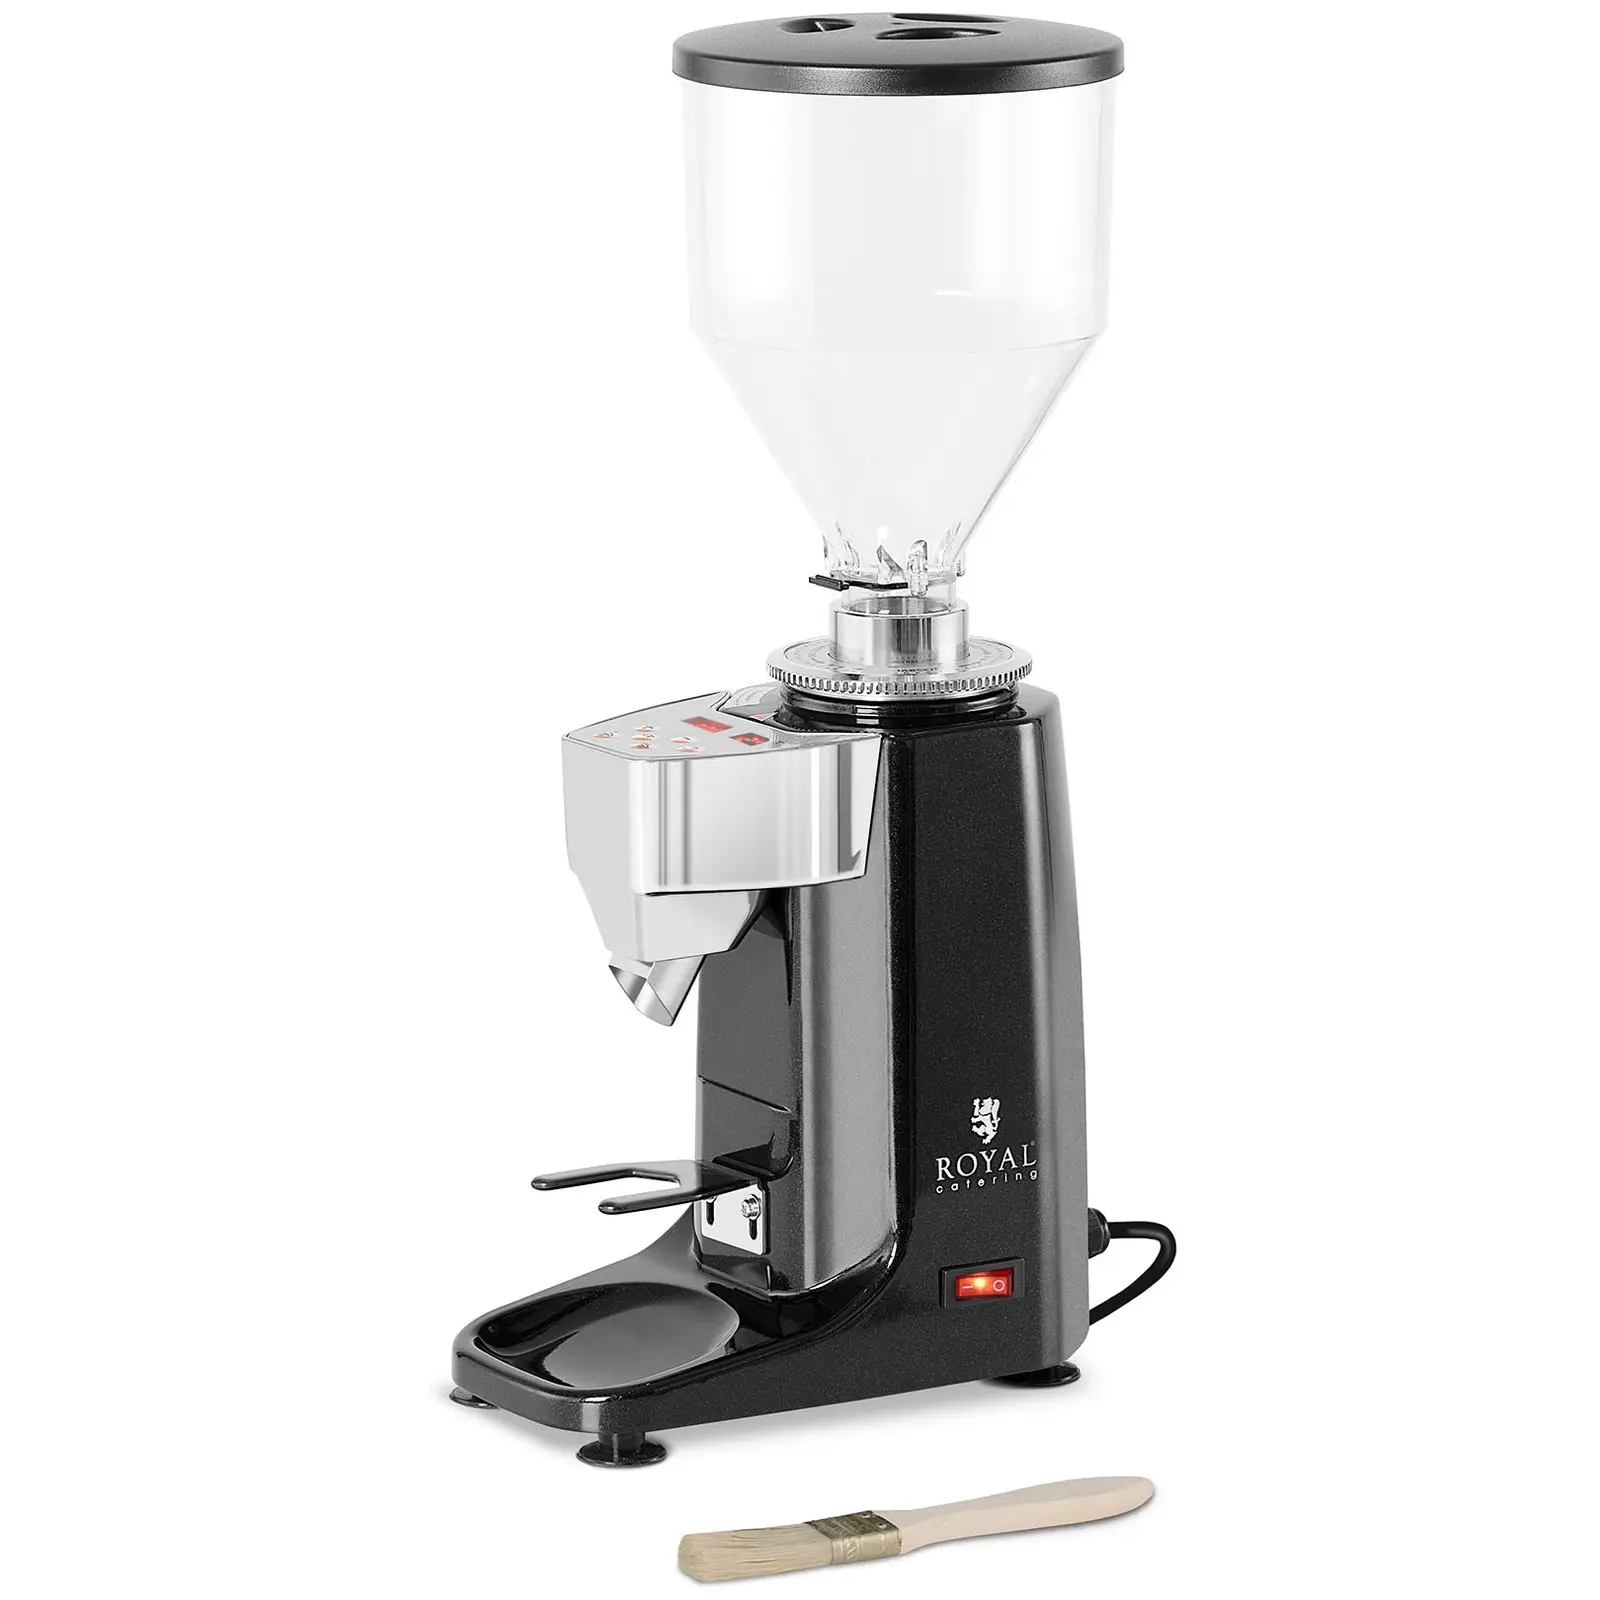 Coffee grinder - 200 W - aluminium - black - LED